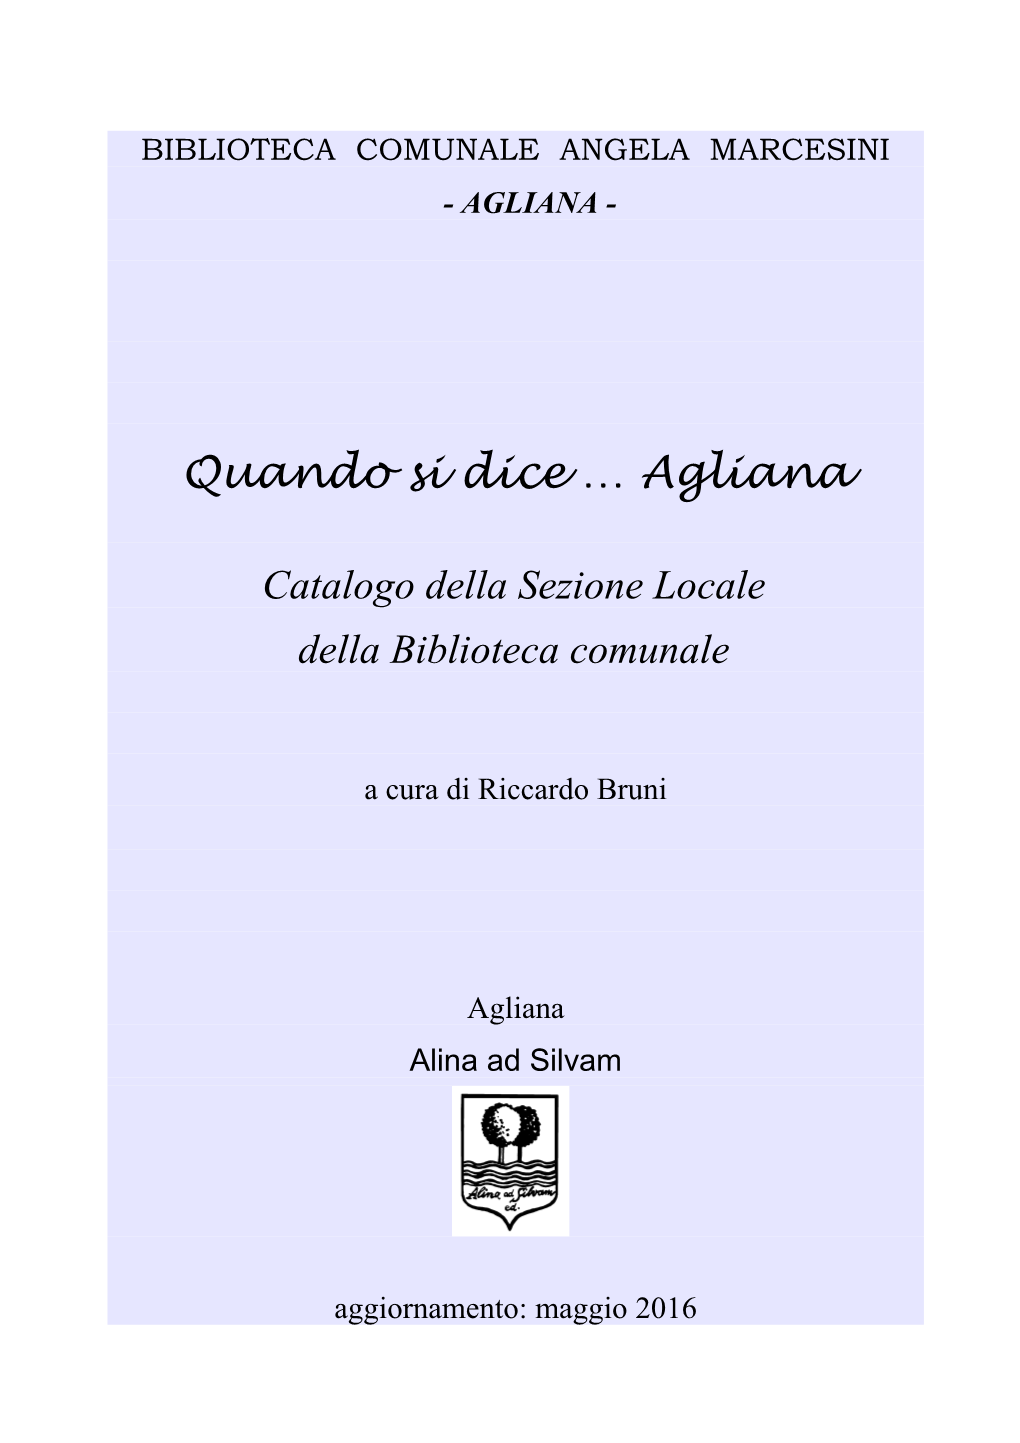 Biblioteca Comunale Angela Marcesini - Agliana